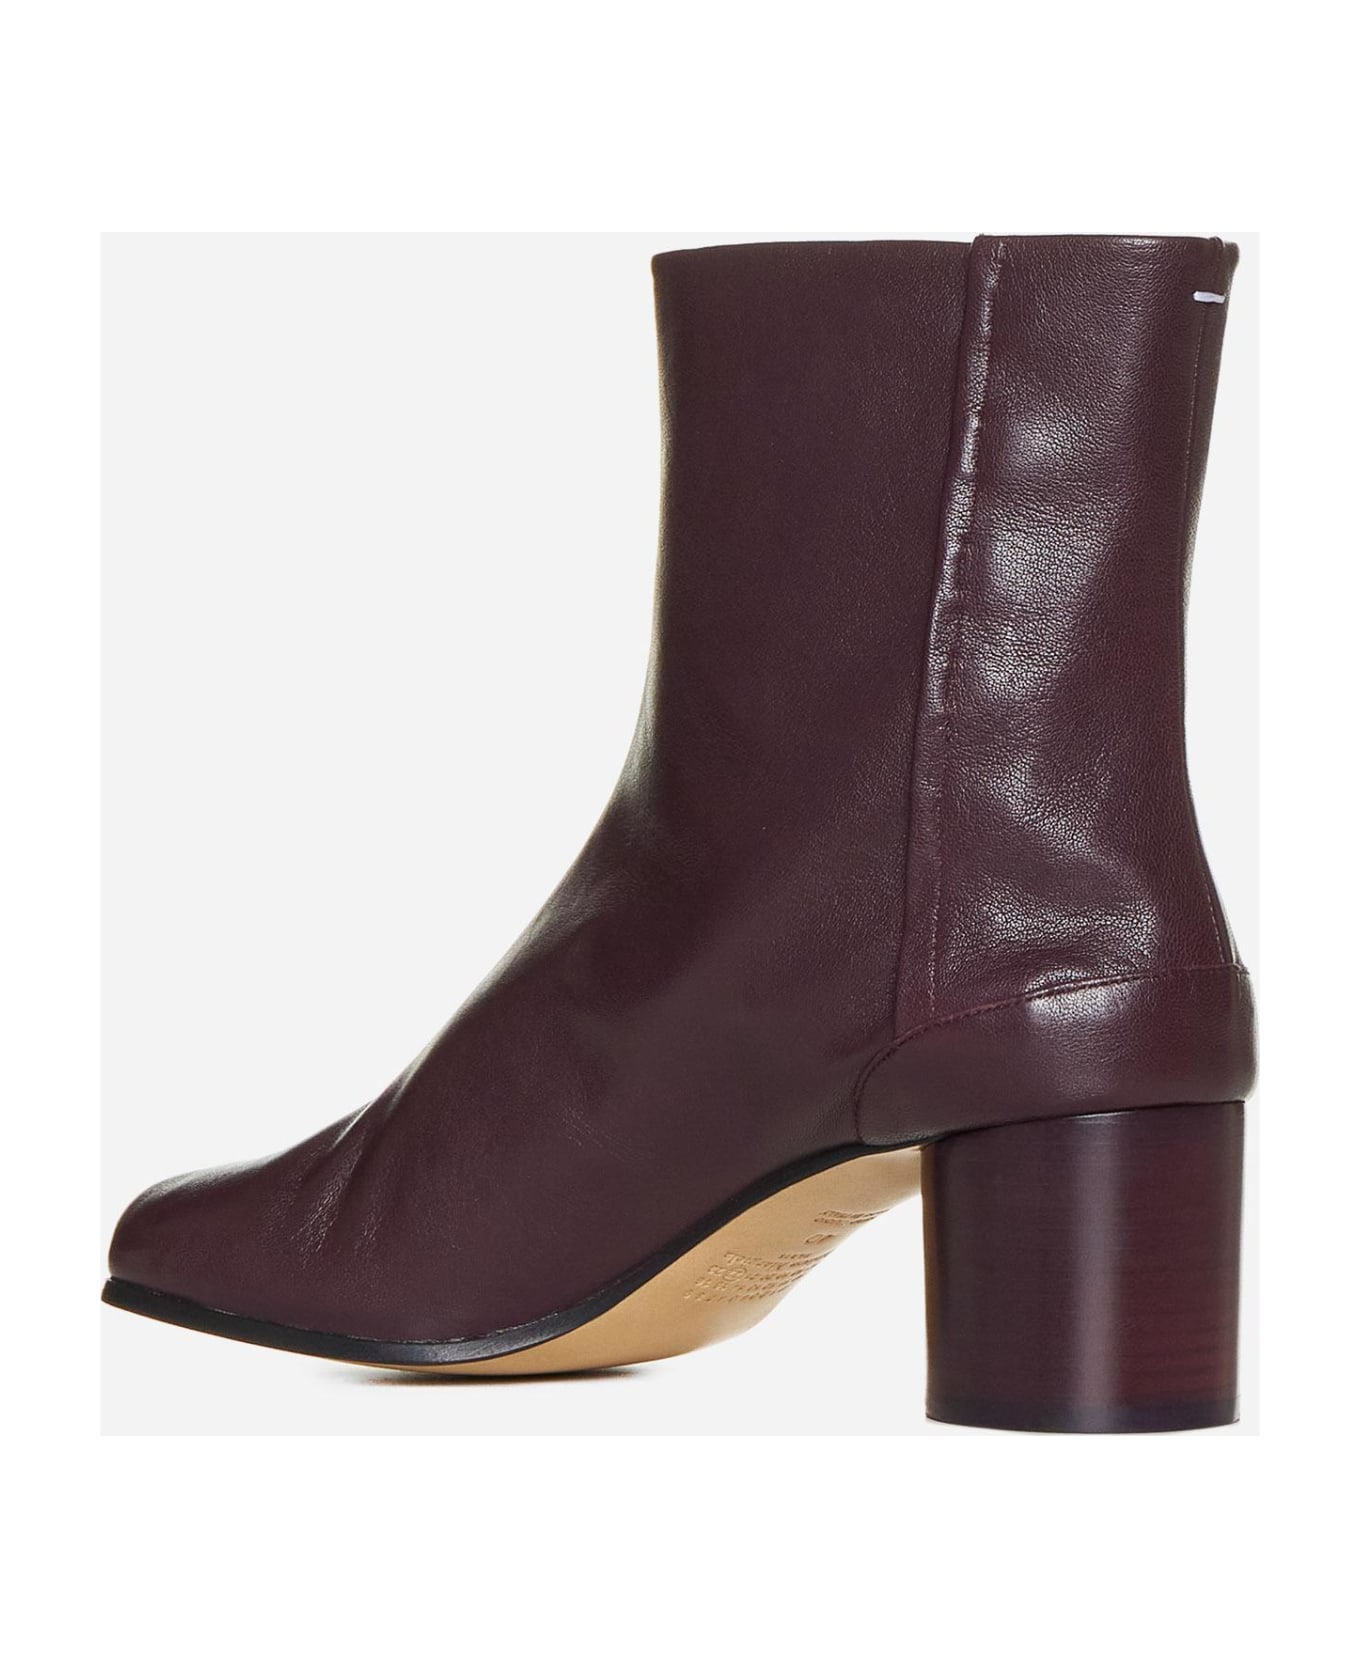 Maison Margiela Tabi Leather Ankle Boots - Merlot